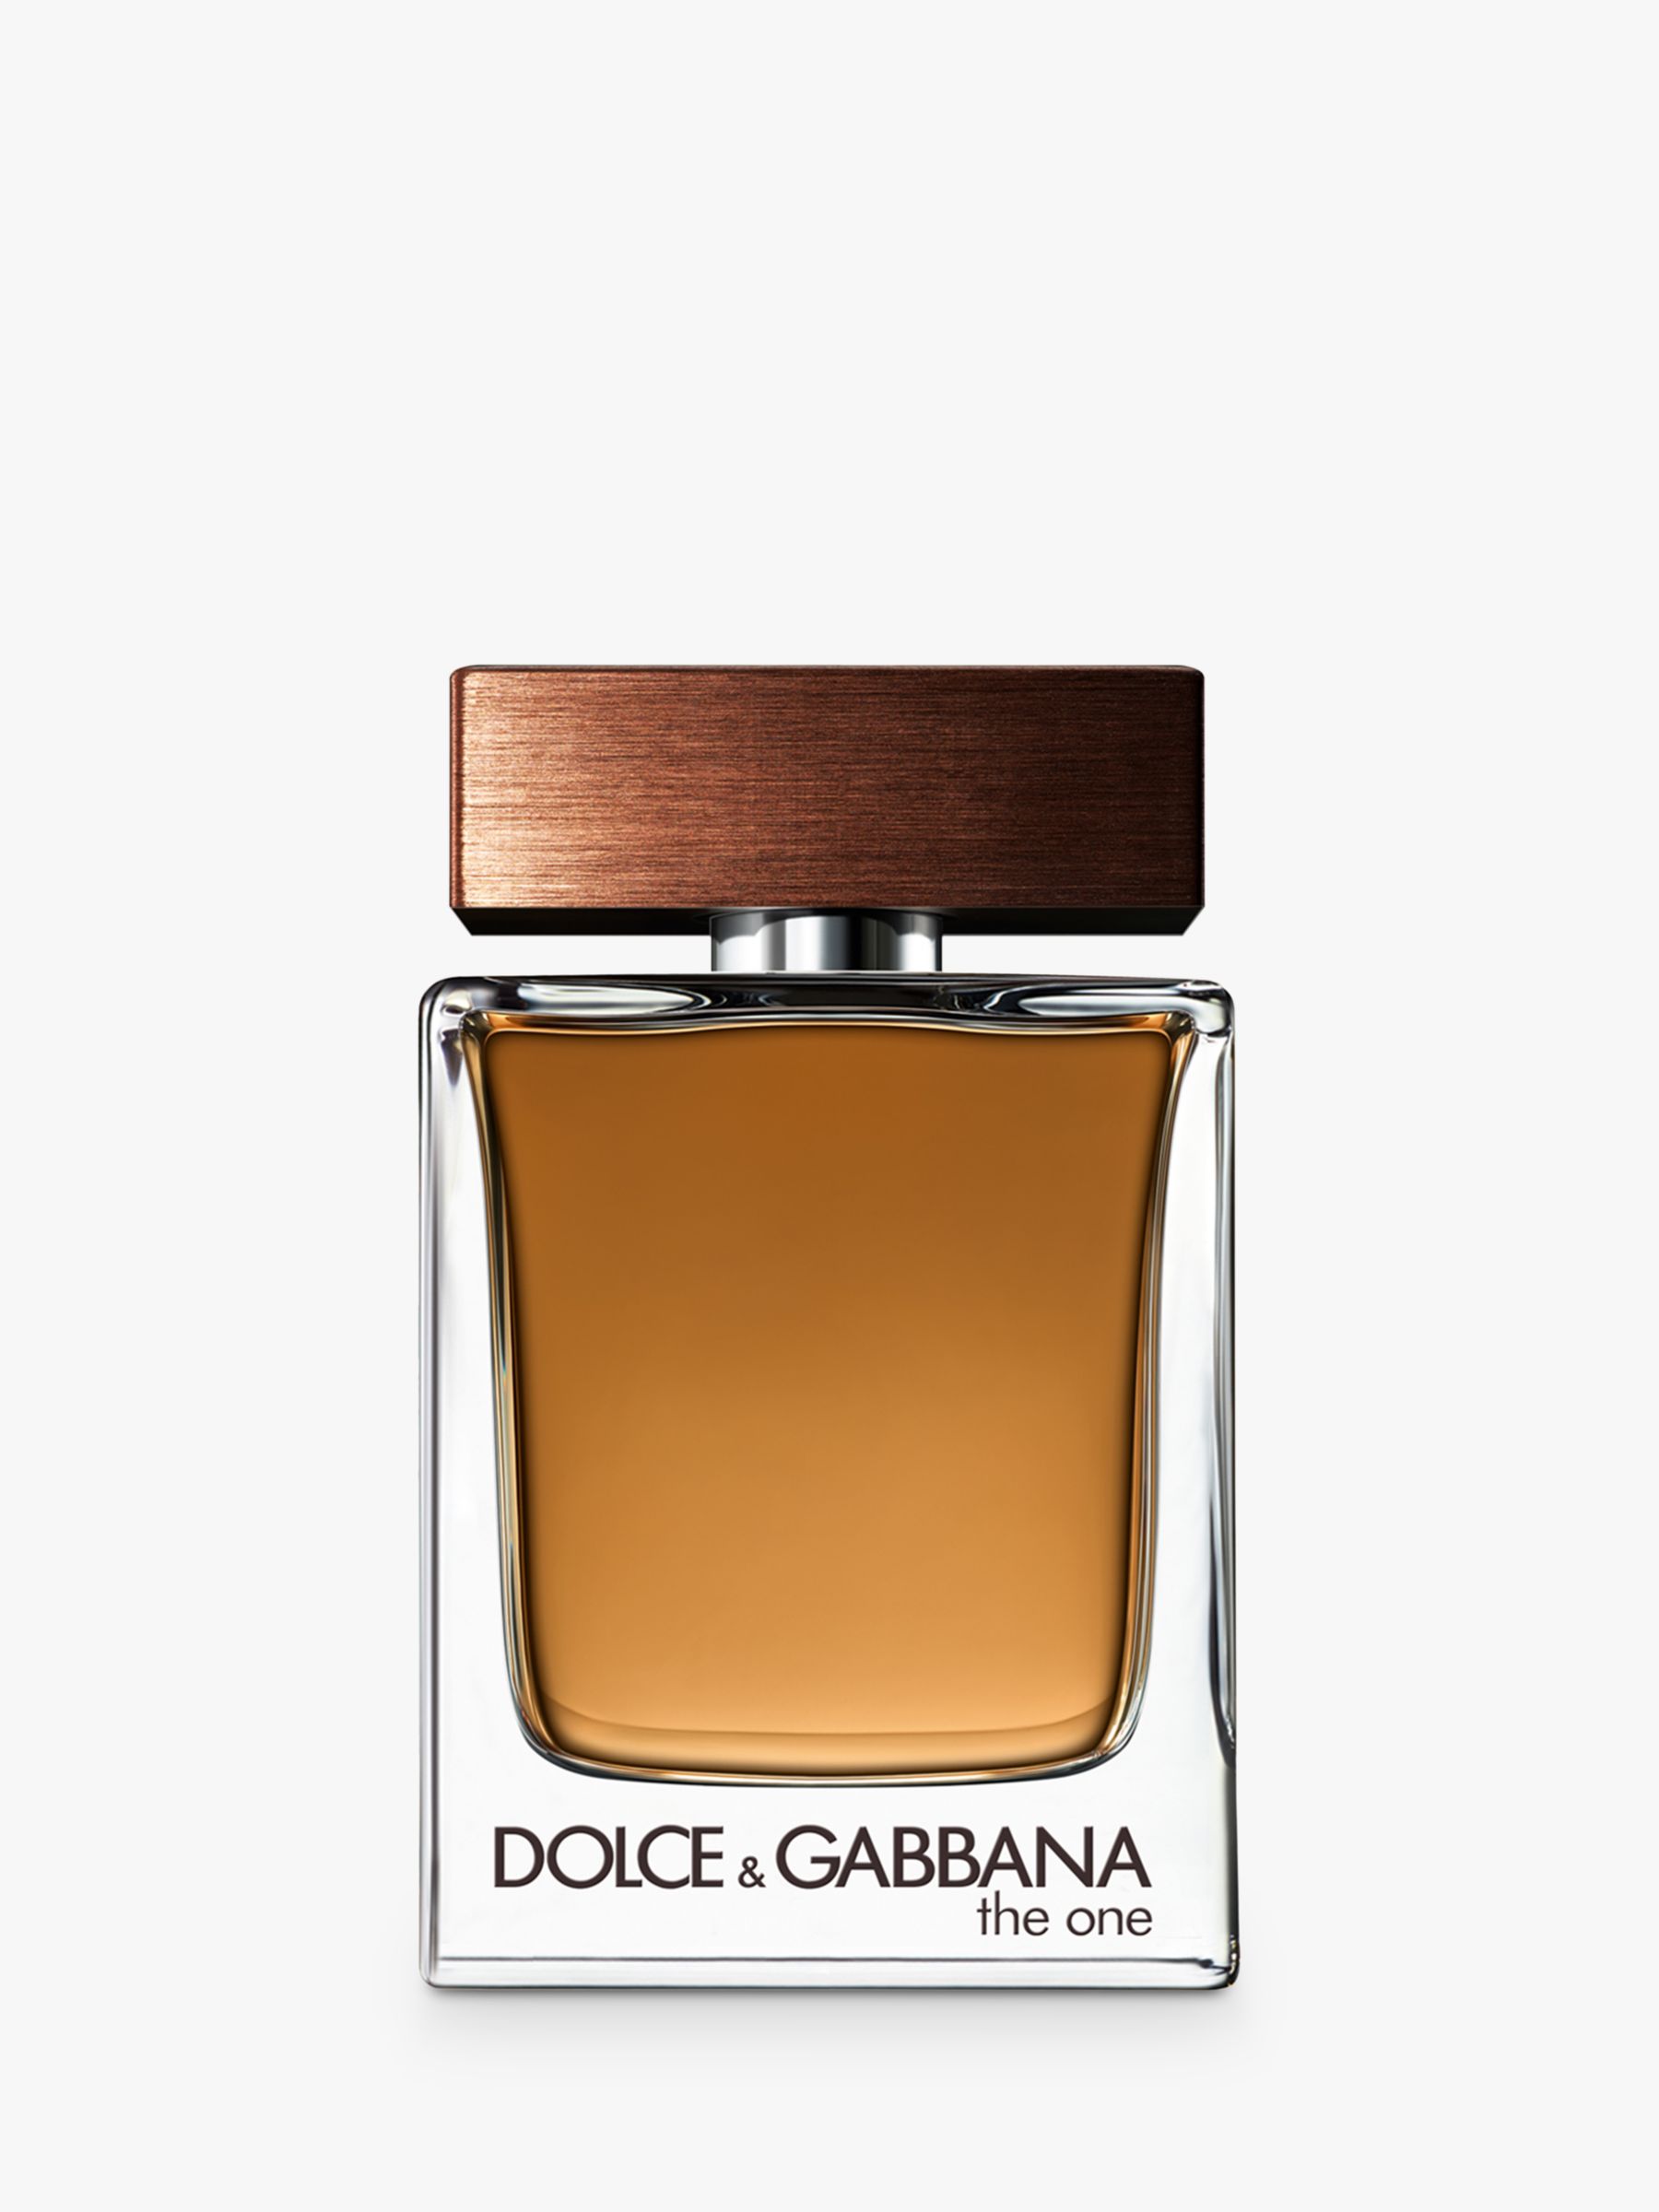 Dolce Gabbana The One Male Hot Sale | website.jkuat.ac.ke